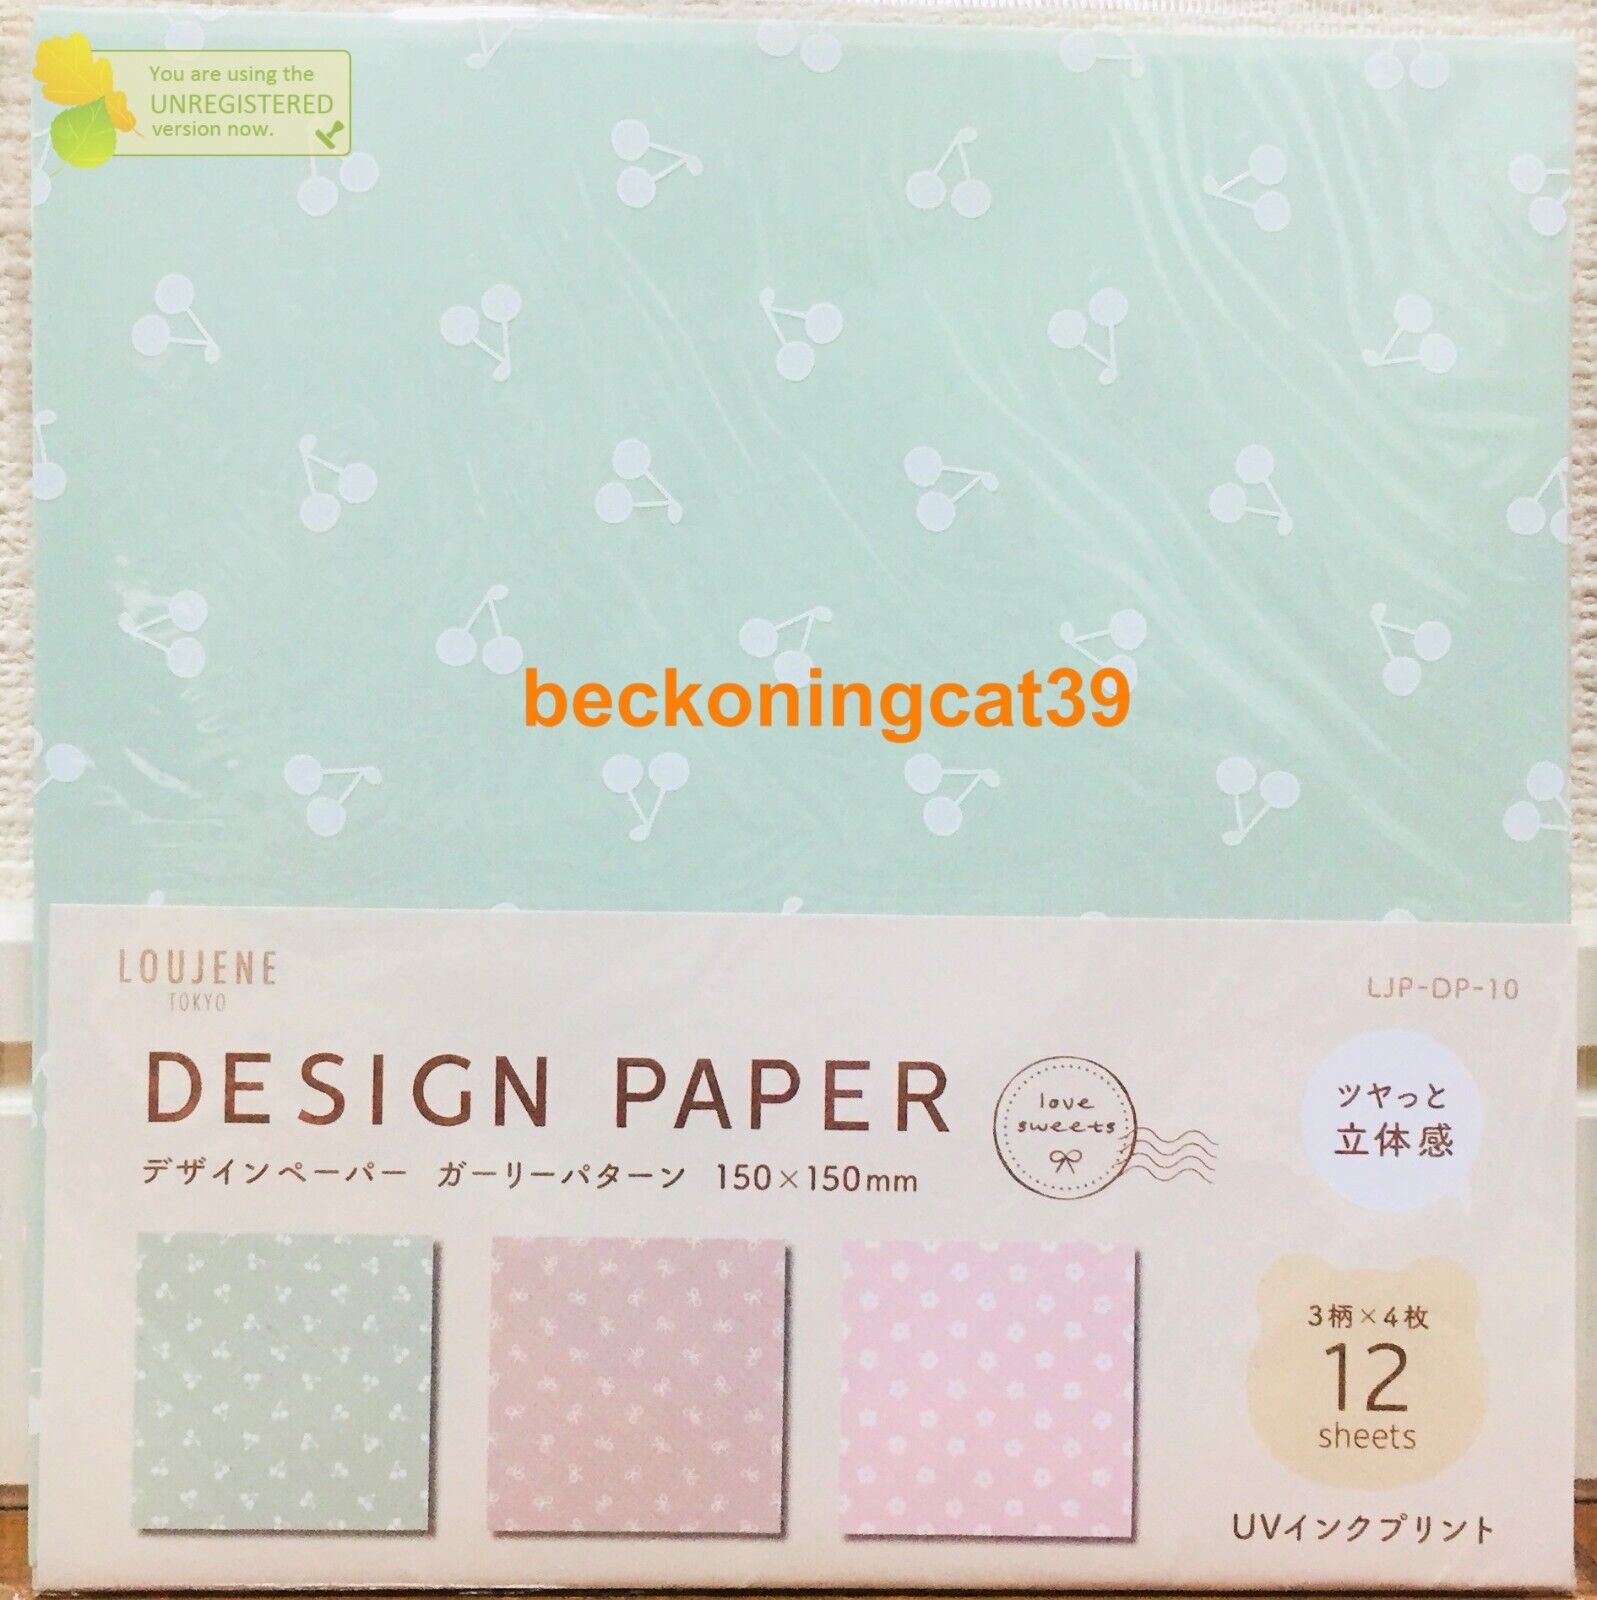 LAST LOUJENE TOKYO Girly Pattern Design Paper 12 Origami Cherry Flower Kid JAPAN